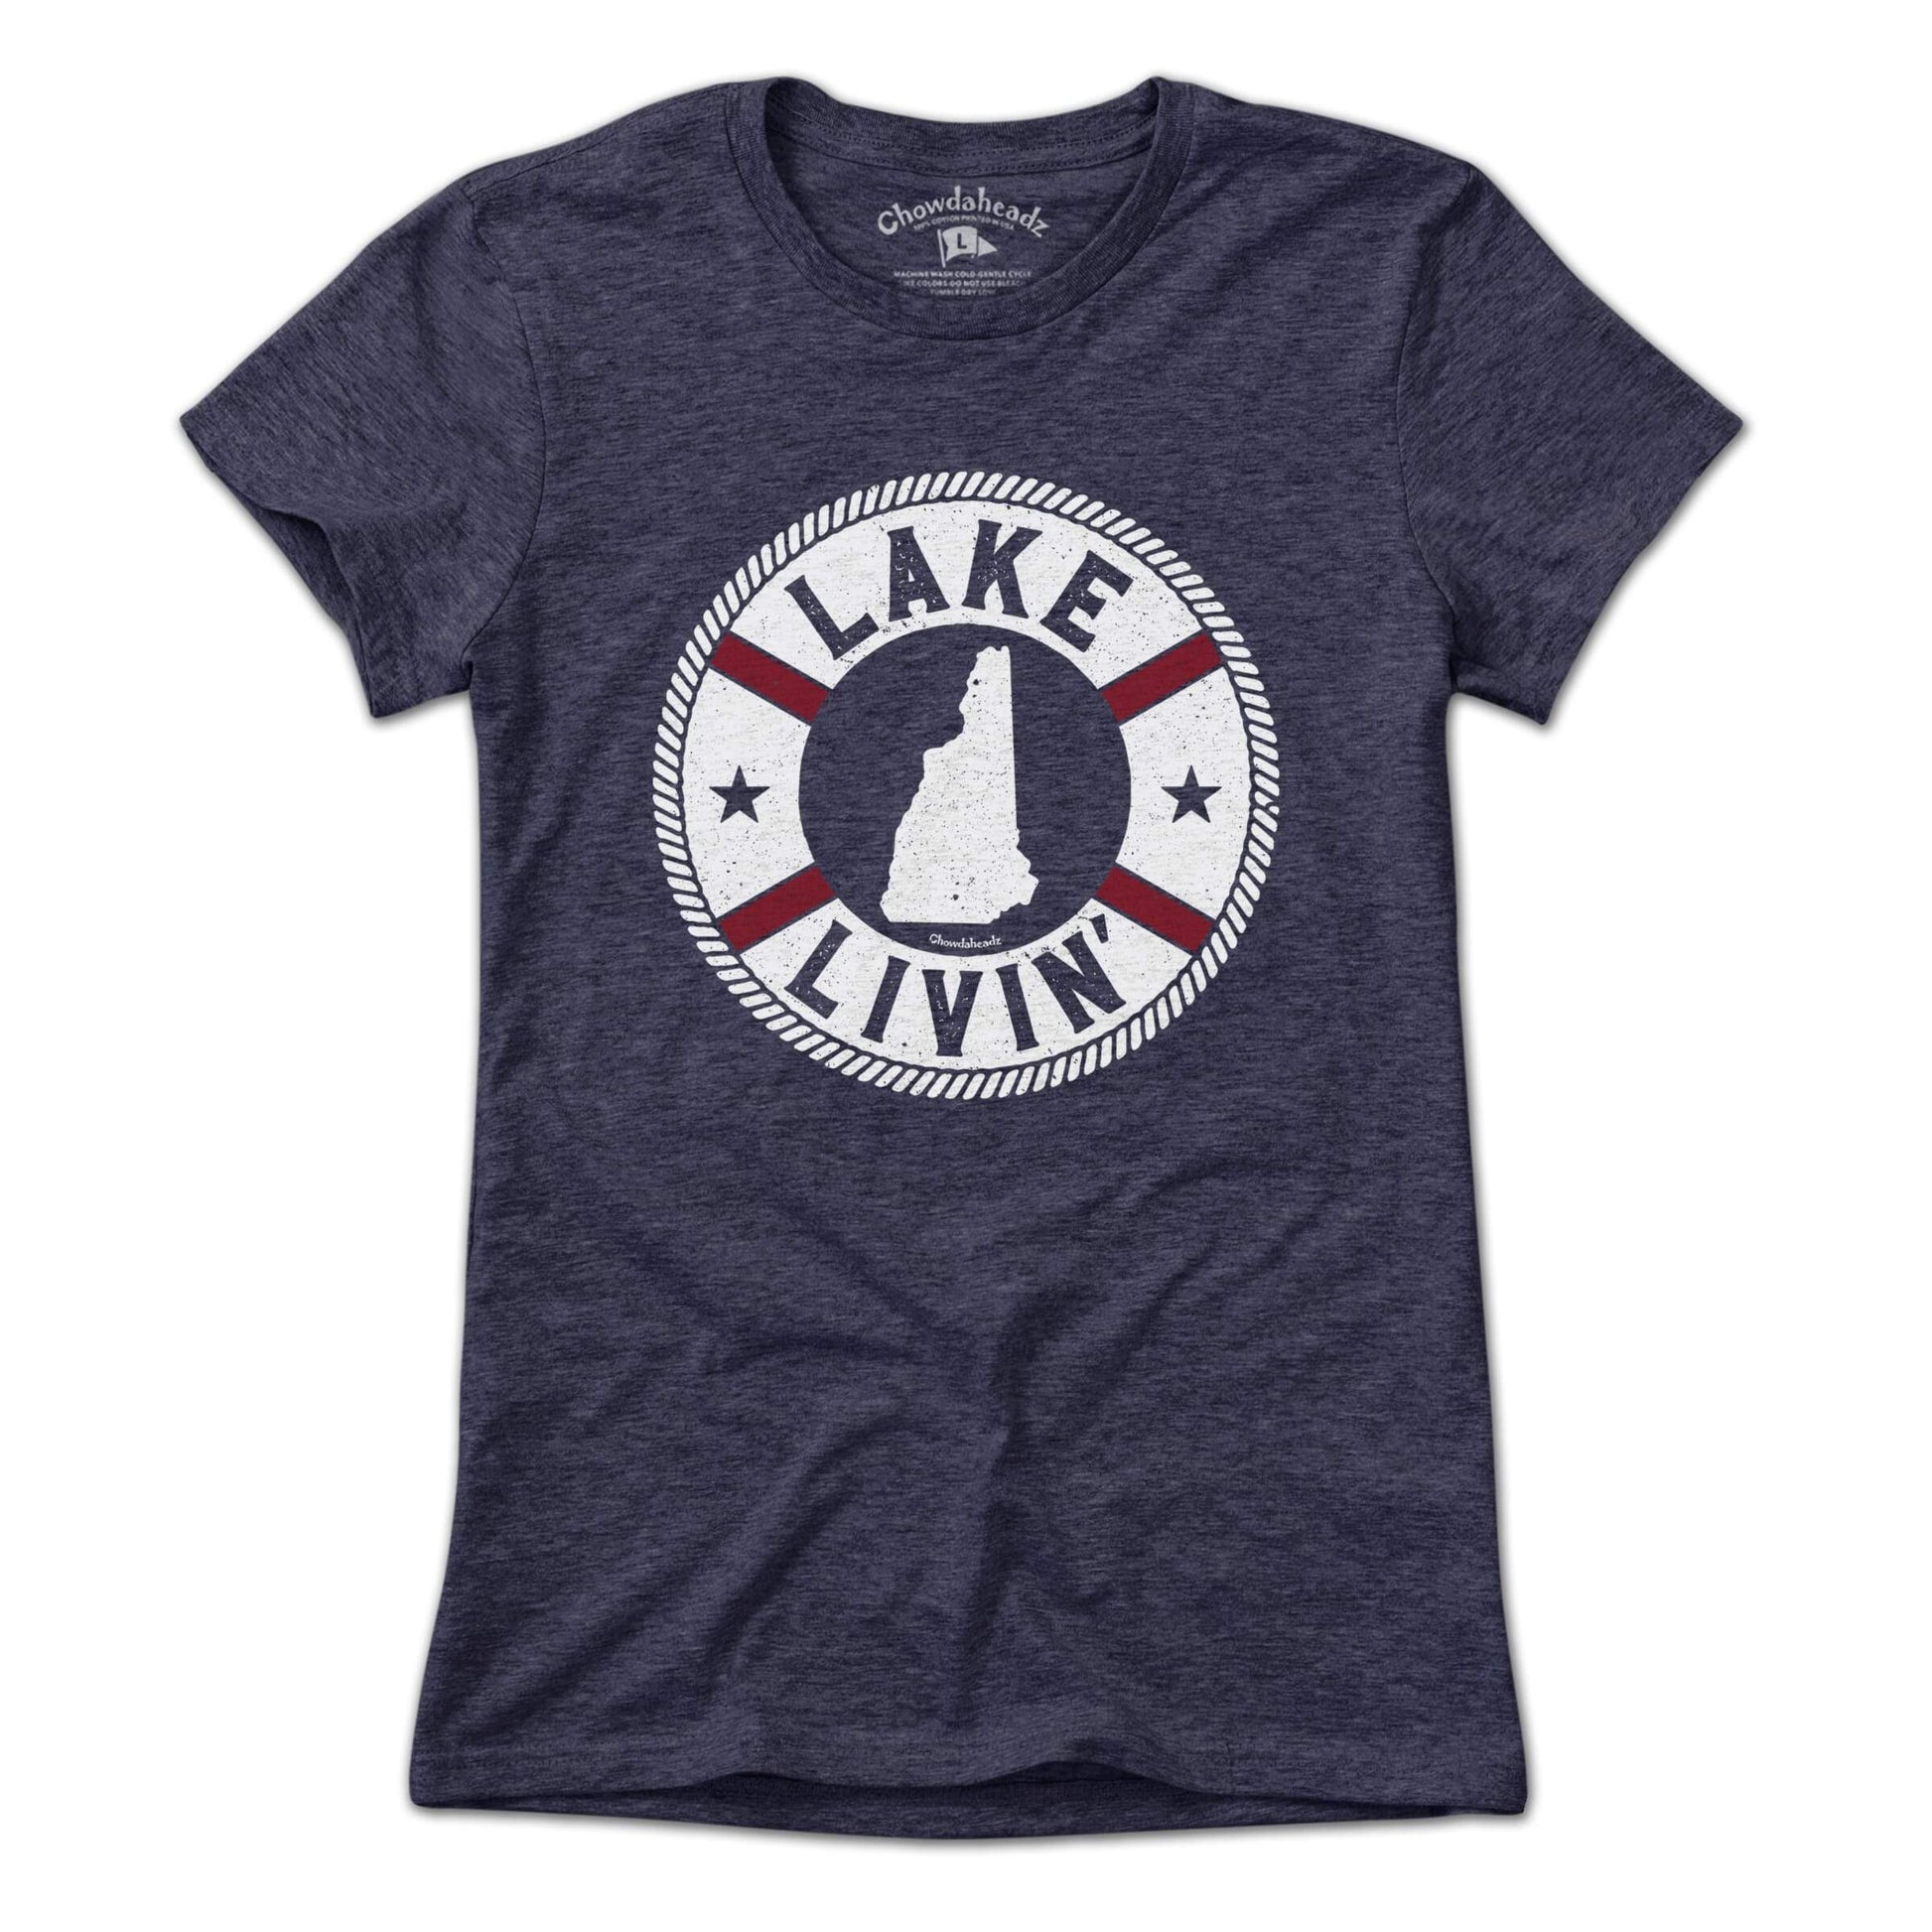 Lake Livin' New Hampshire T-Shirt - Chowdaheadz